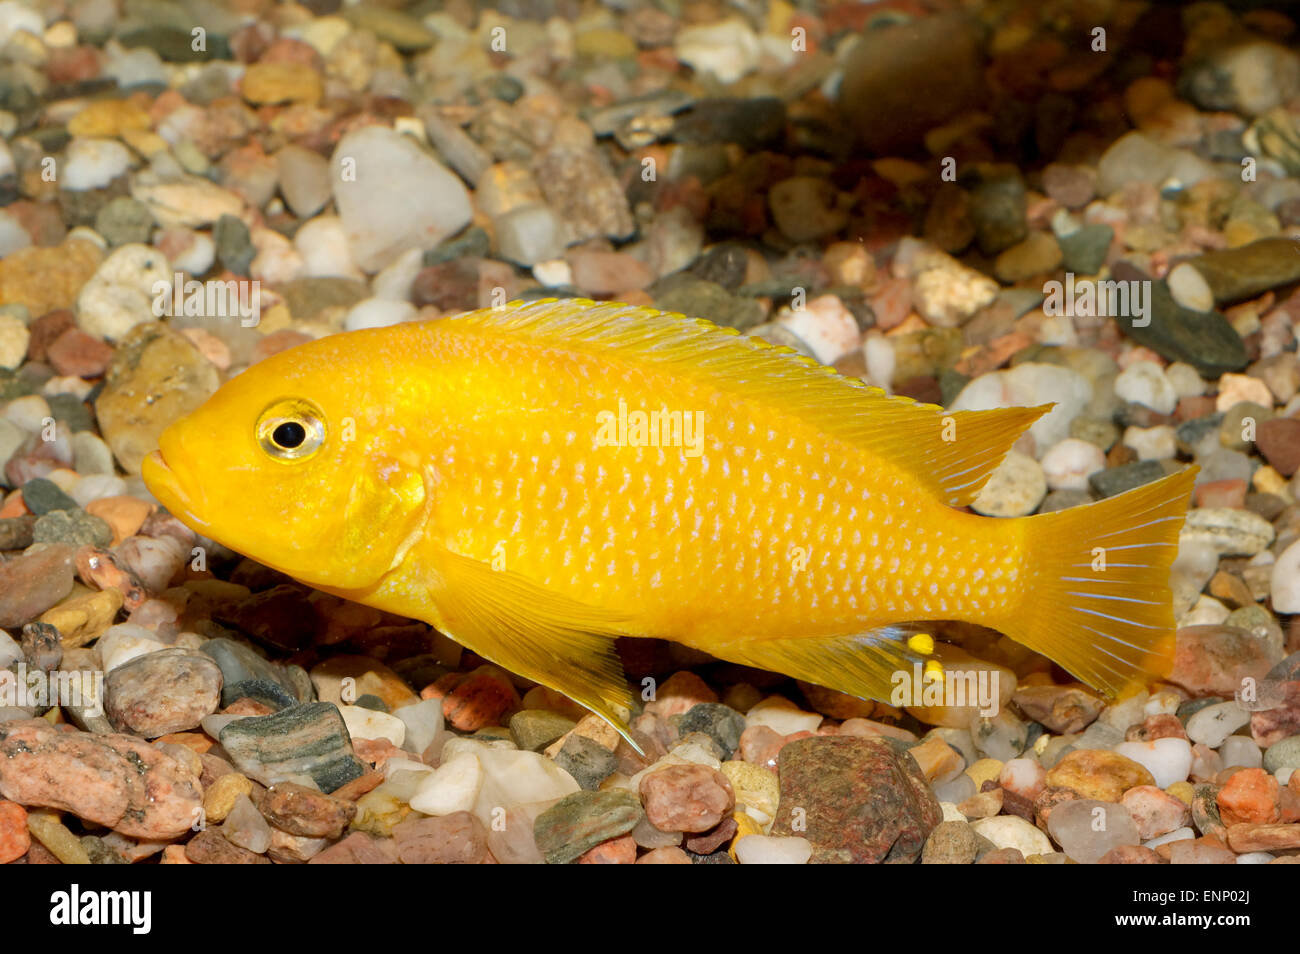 Nice yellow cichlid fish from genus Pseudotropheus. Stock Photo